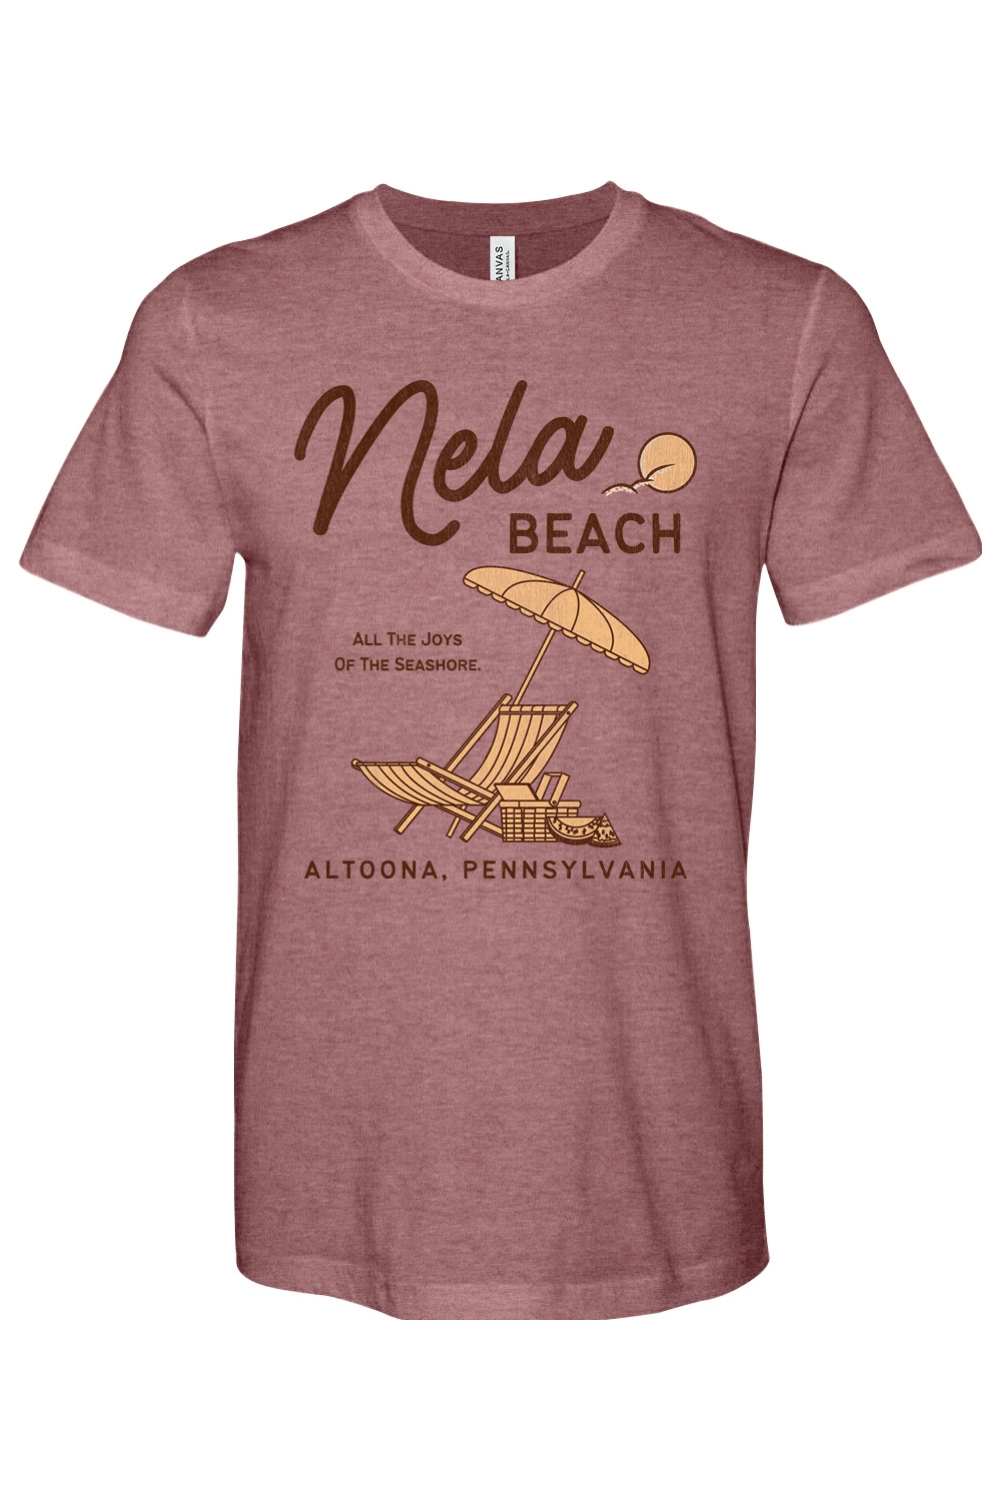 Nela Beach - Altoona, PA - Yinzylvania